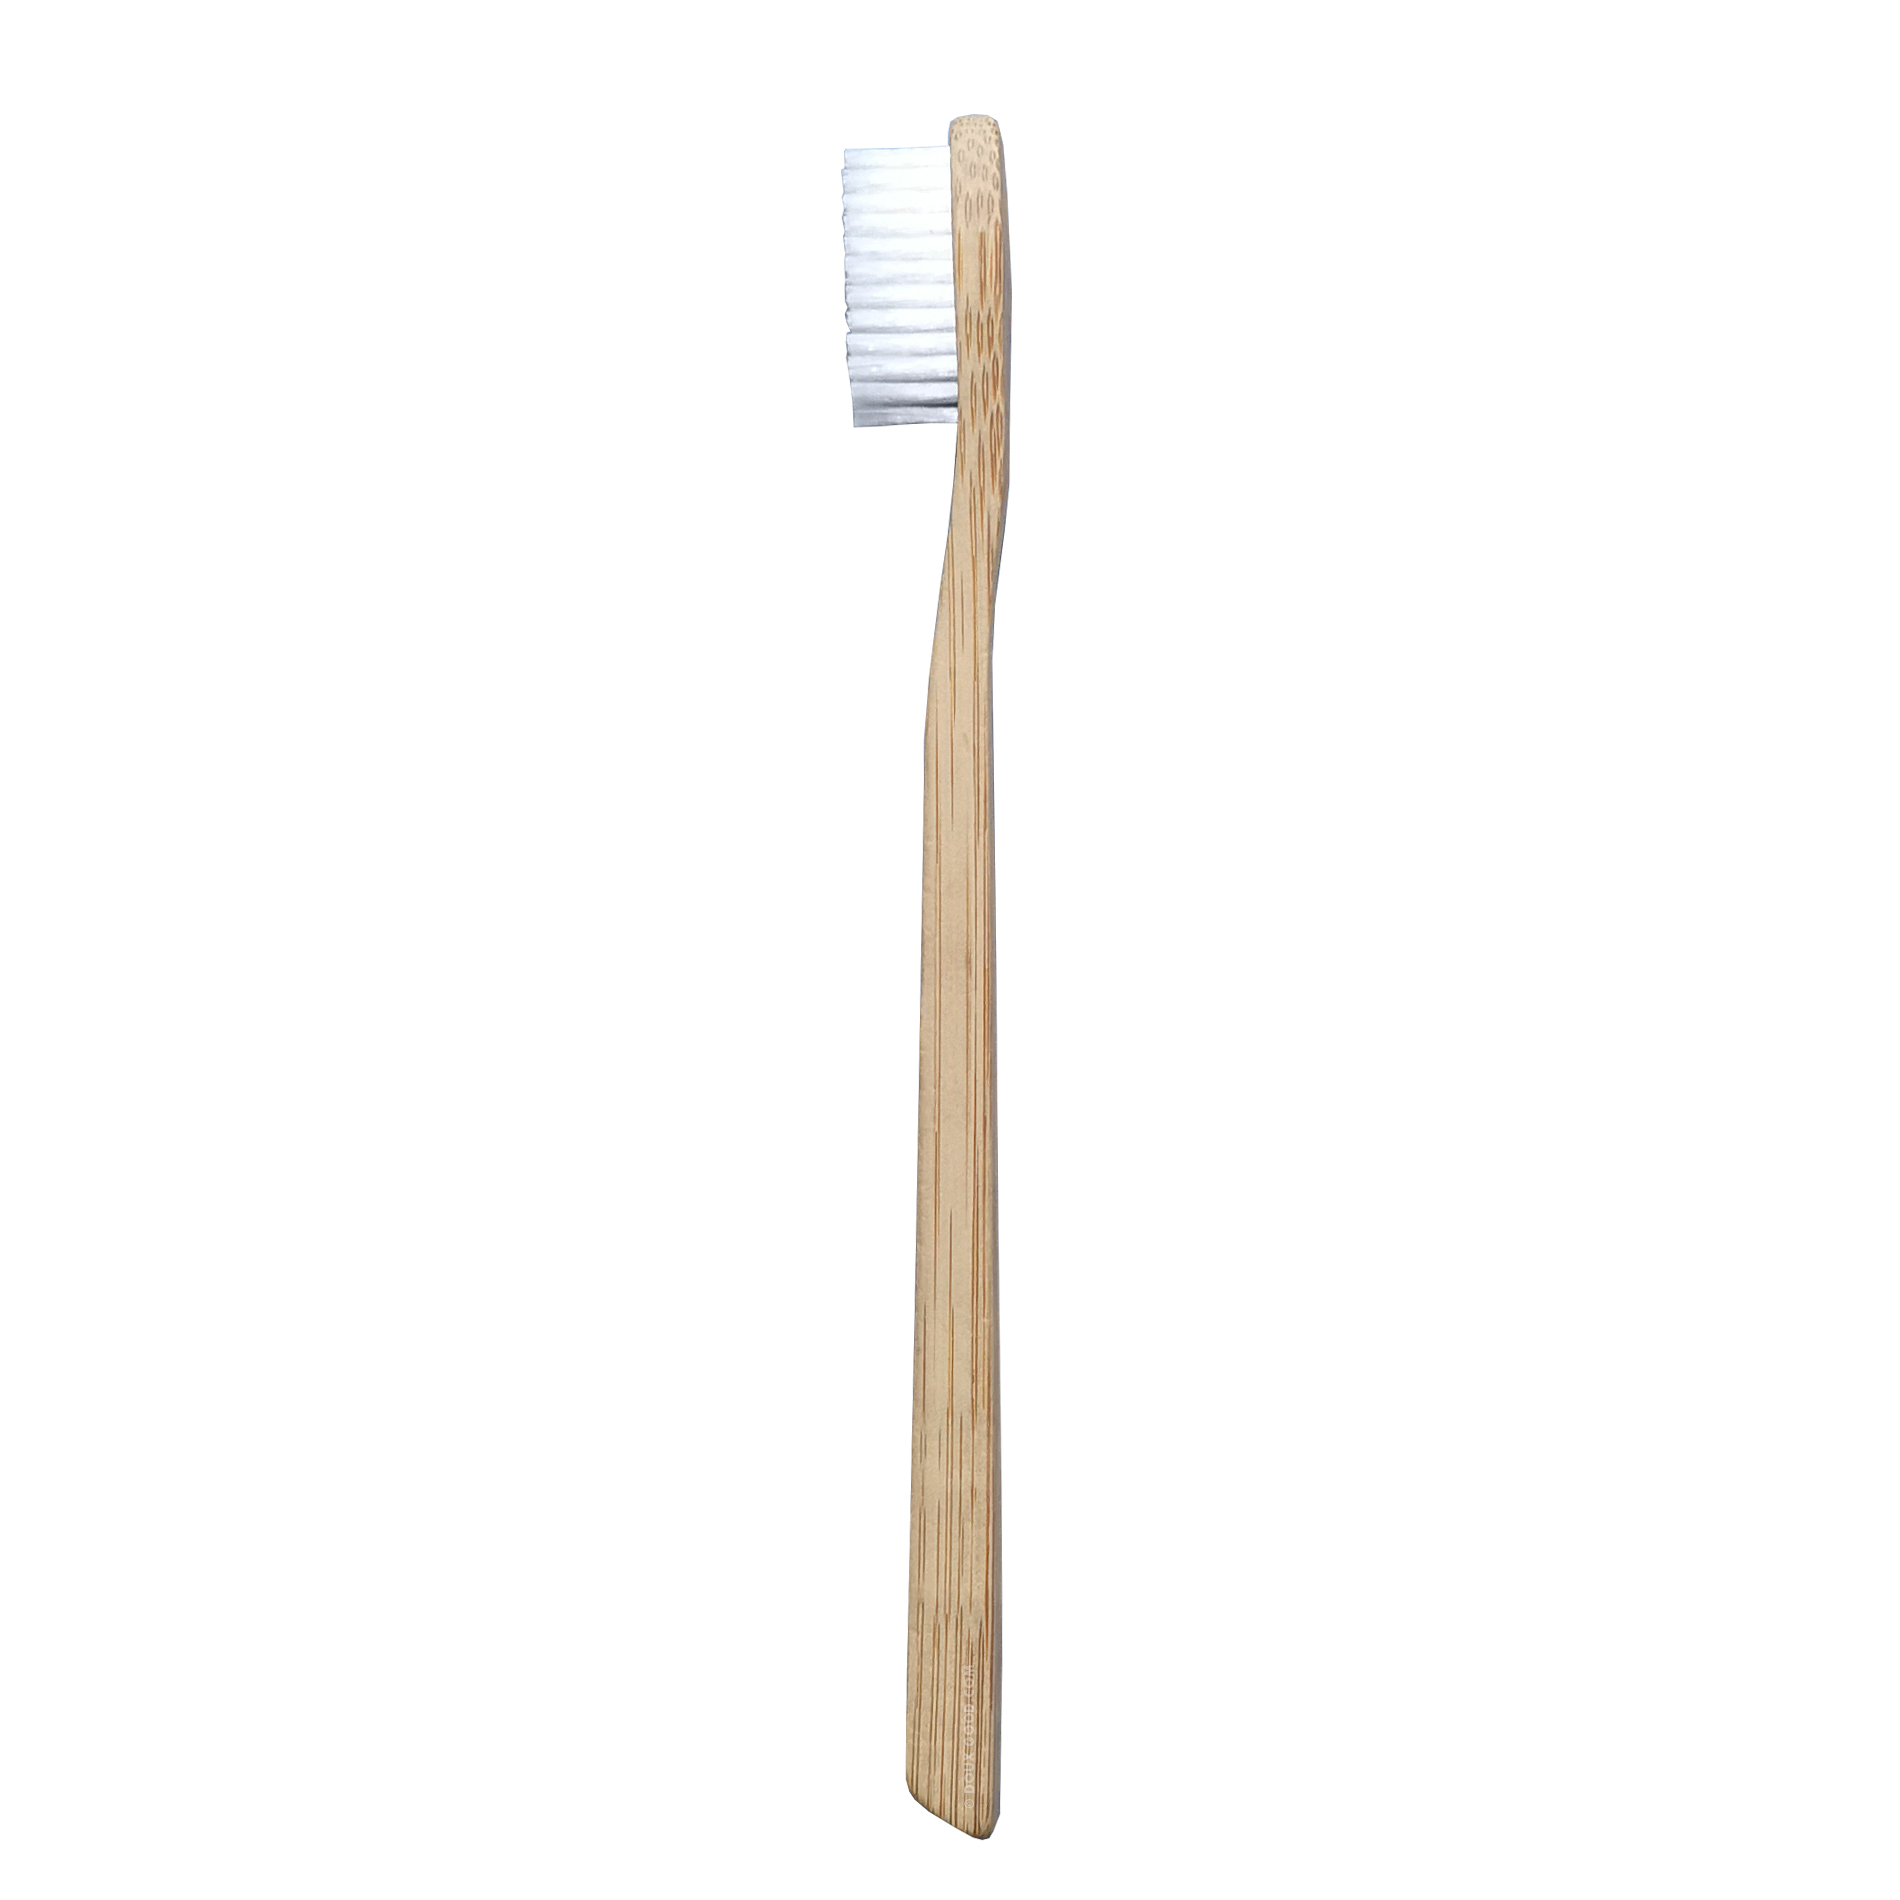 My Boo Company - brosse à dents en bambou - Adulte medium - Transparent